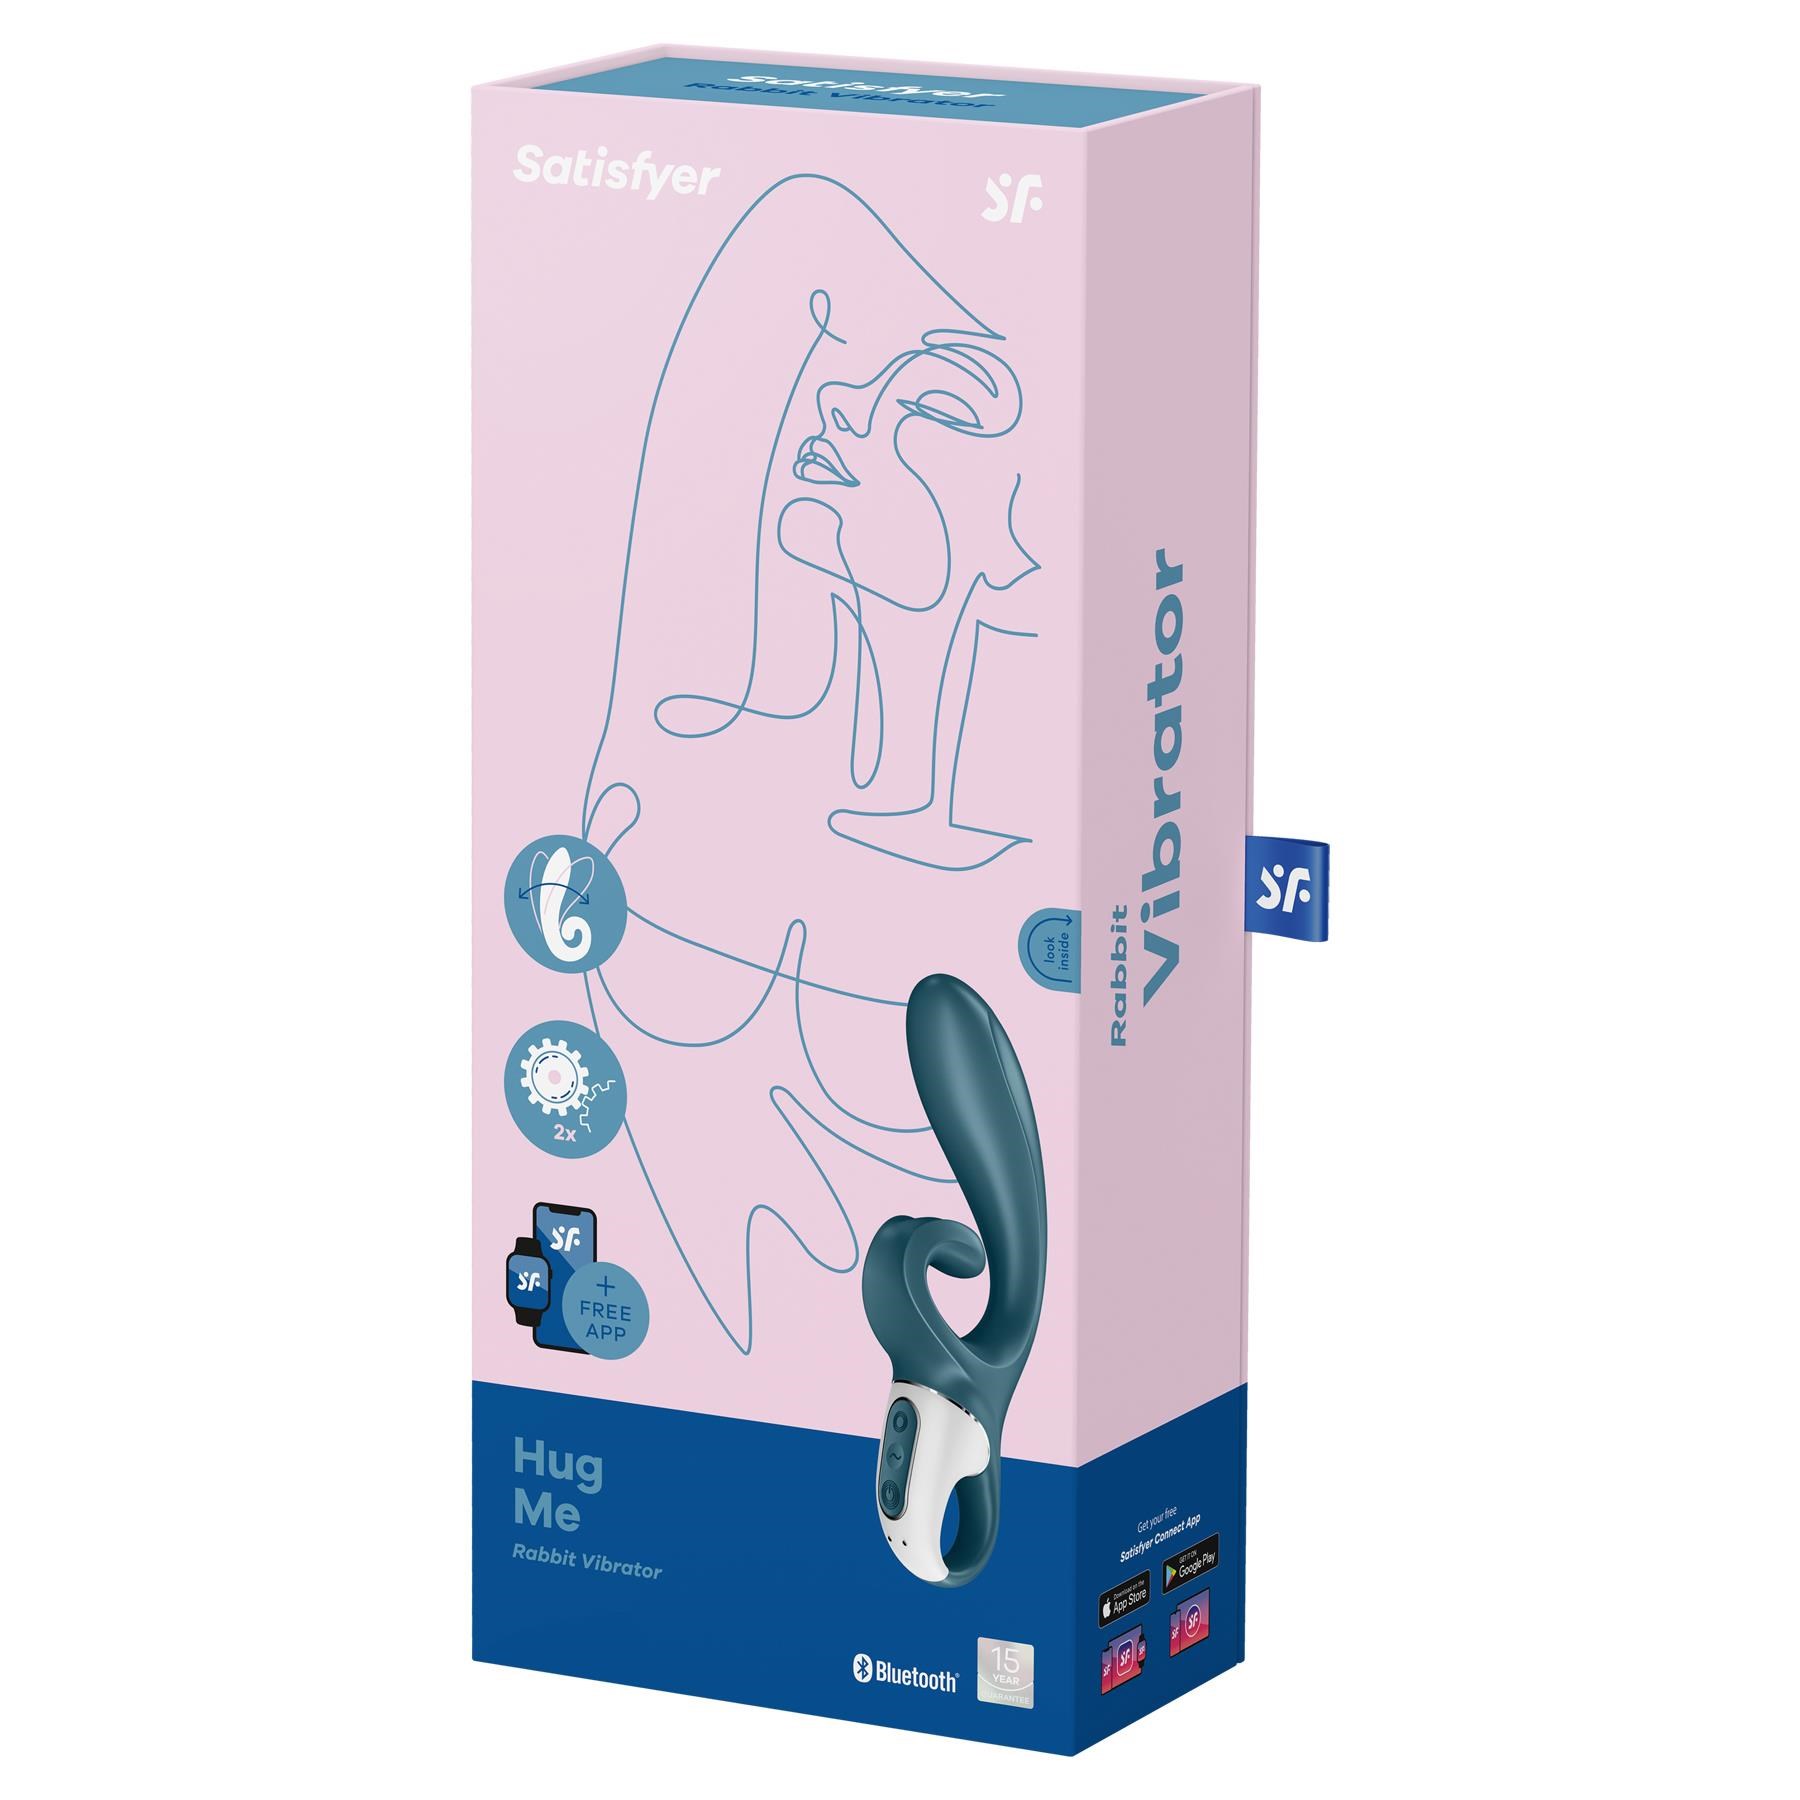 Satisfyer Hug Me Rabbit Vibrator - Packaging Shot